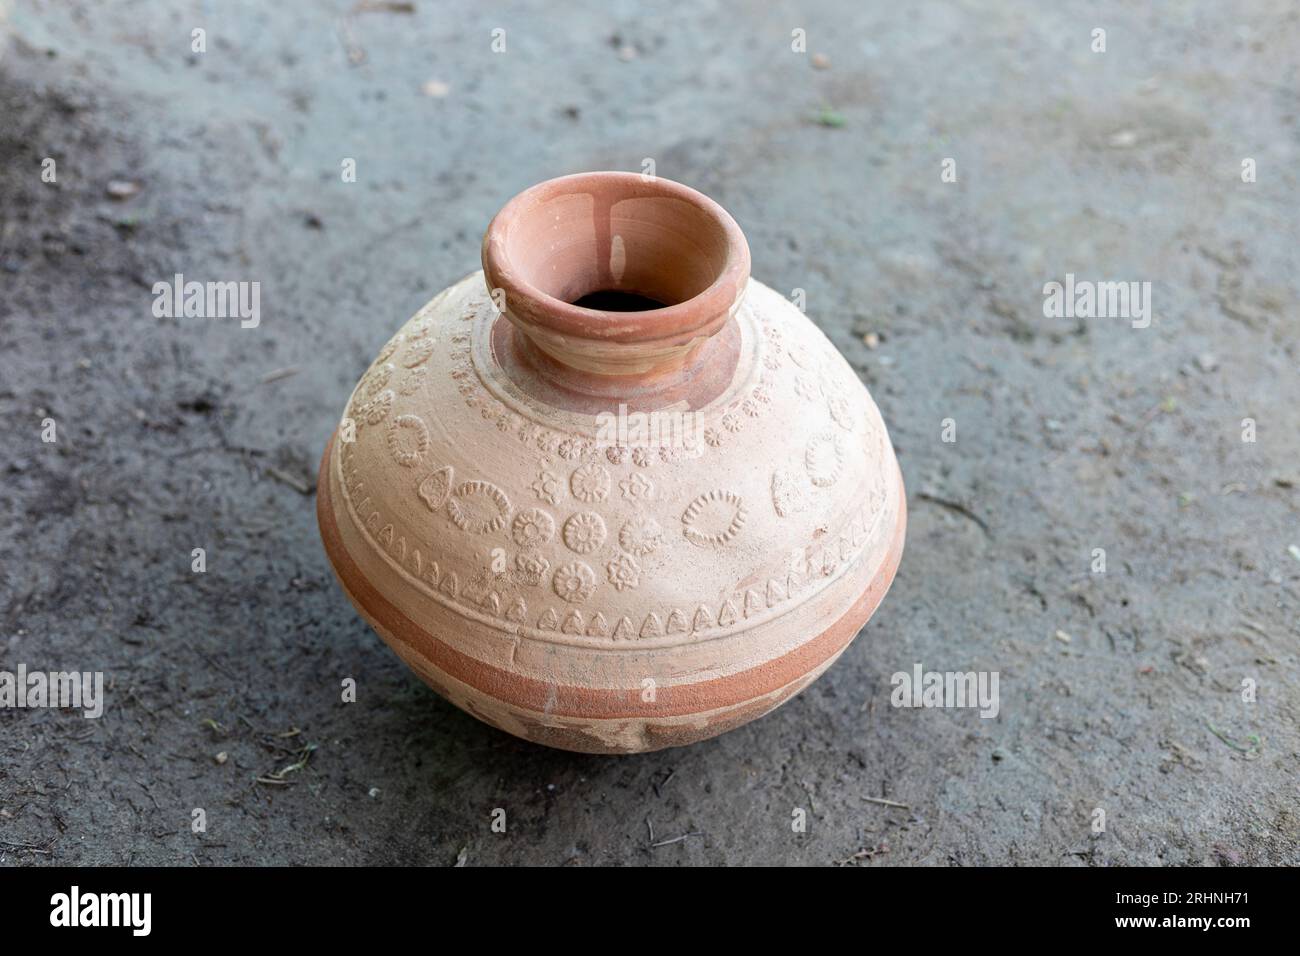 https://c8.alamy.com/comp/2RHNH71/handmade-clay-water-pot-closeup-selective-focus-2RHNH71.jpg